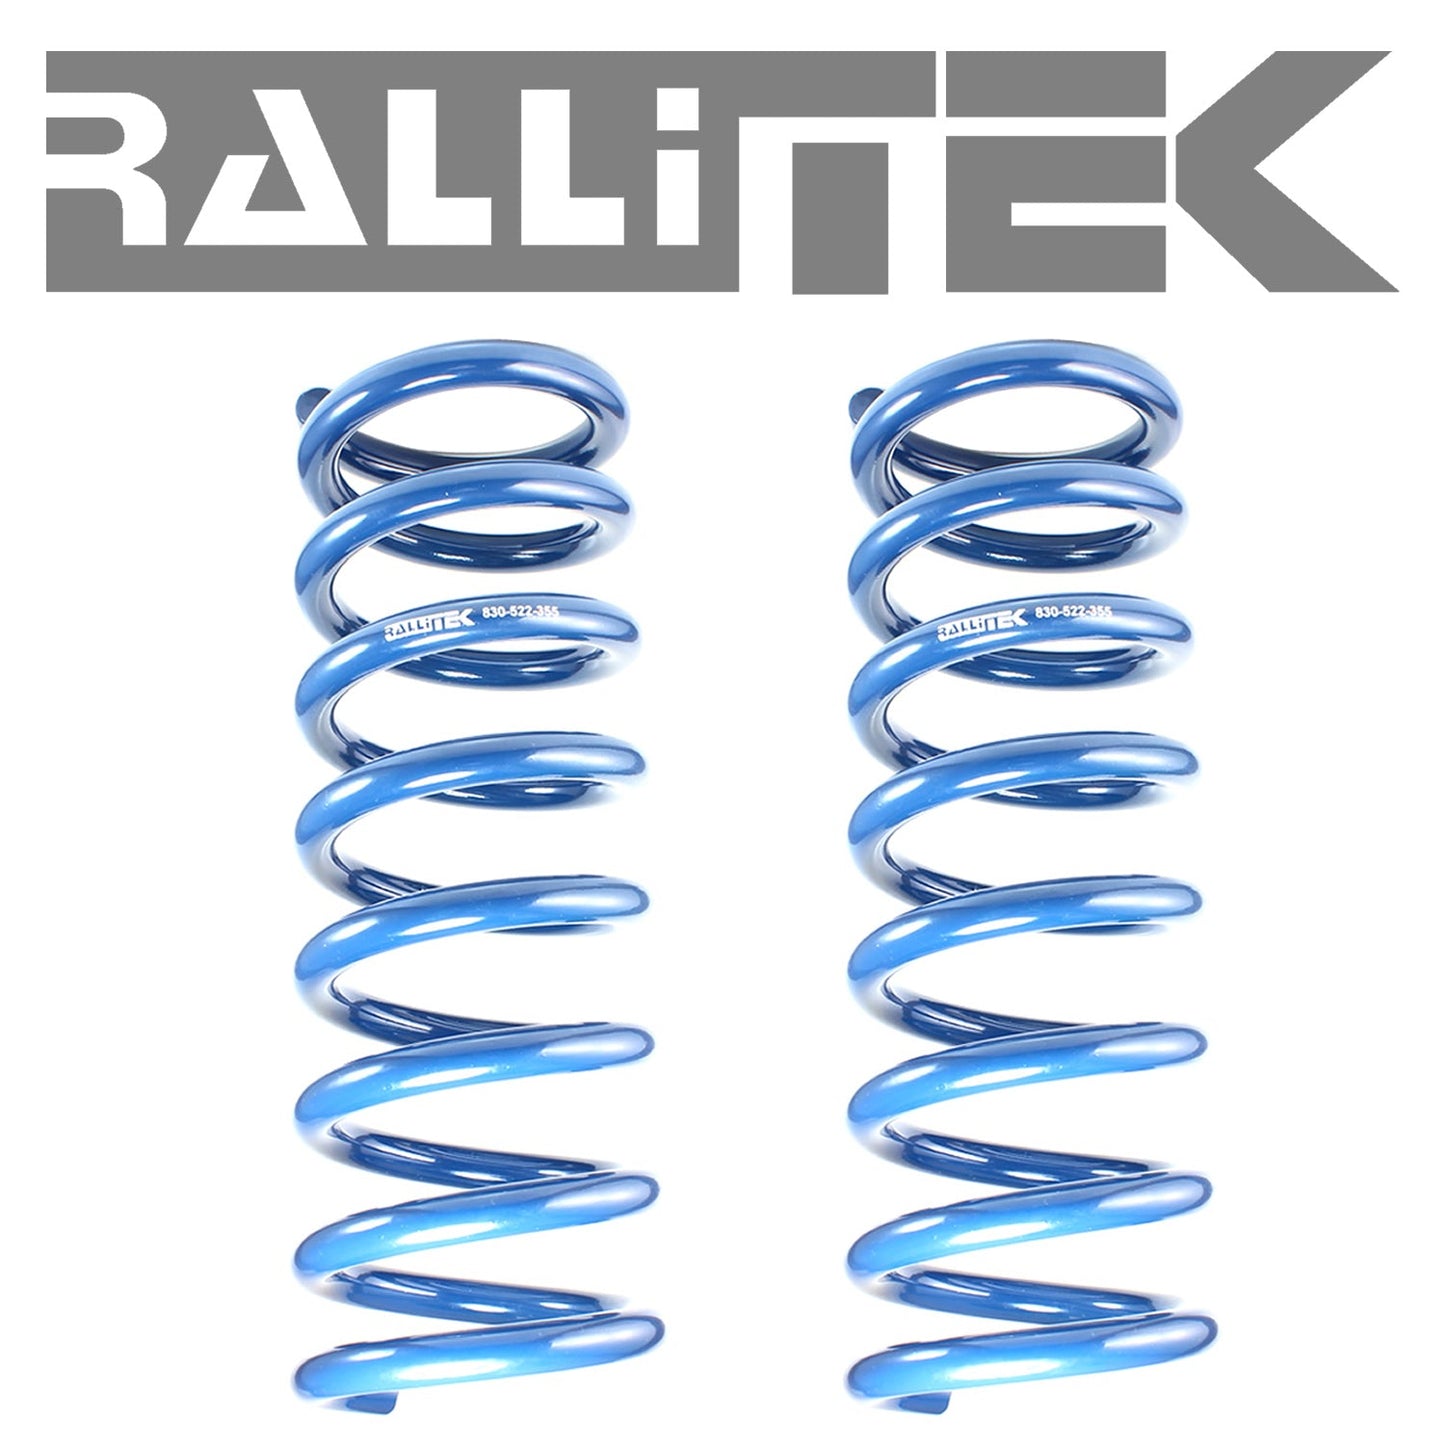 RalliTEK 1.4" Rear Raised Overload Springs & KYB Struts Assembled - Outback 2010-2012